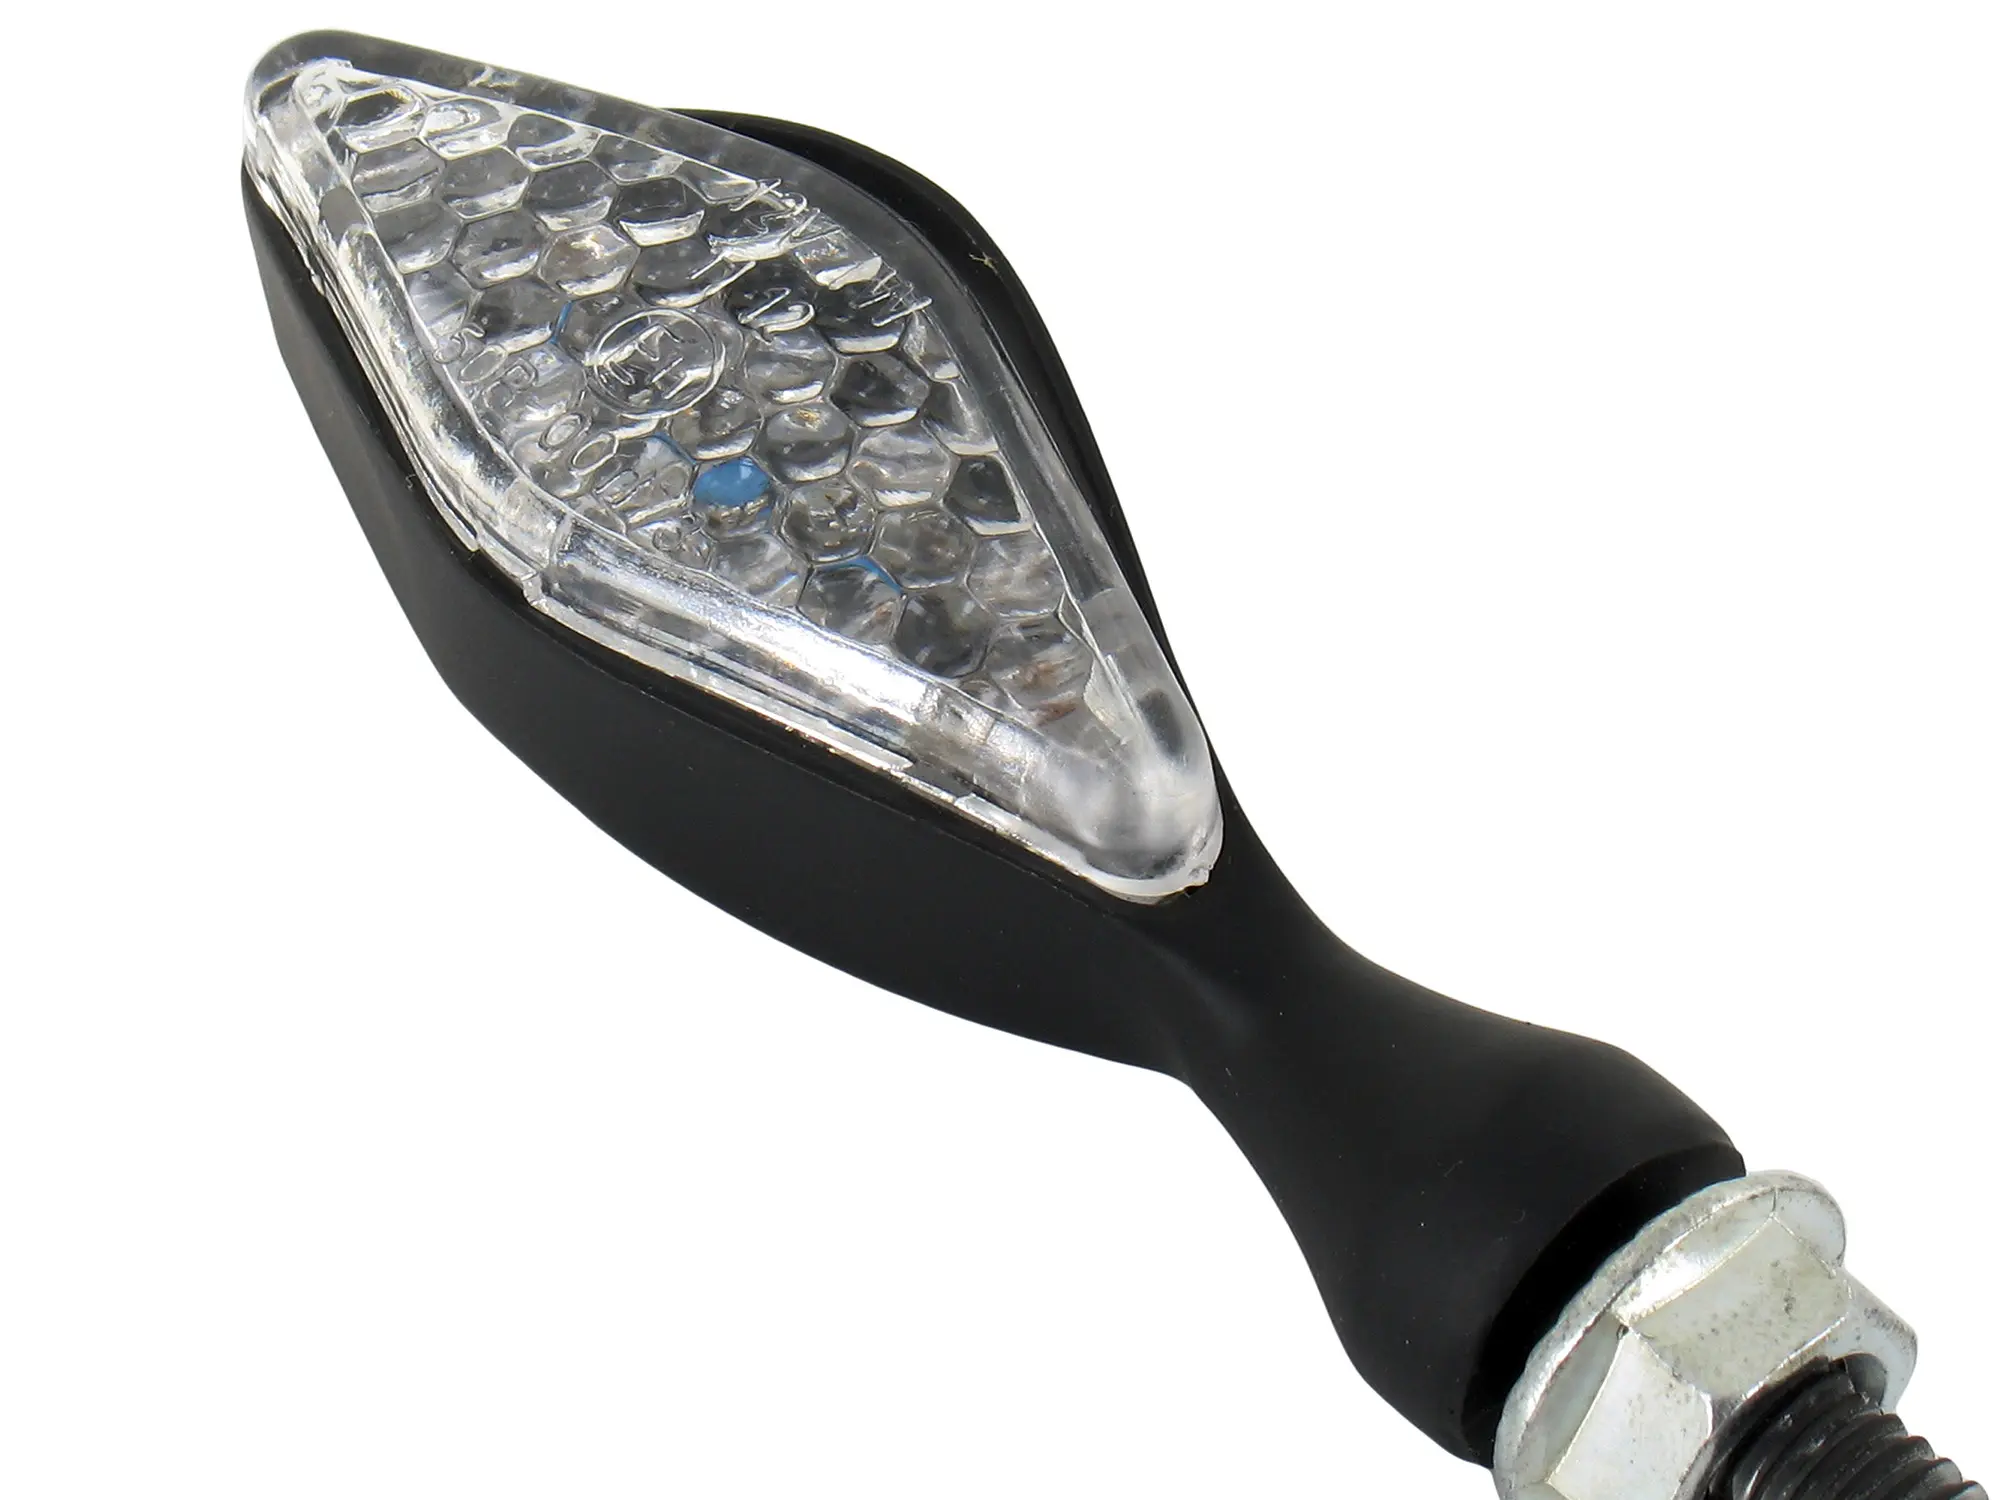 1x Mini-Blinker 12V LED in Mattschwarz mit Klarglas, E-geprüft - rechts, Art.-Nr.: 99002281 - Bild 1